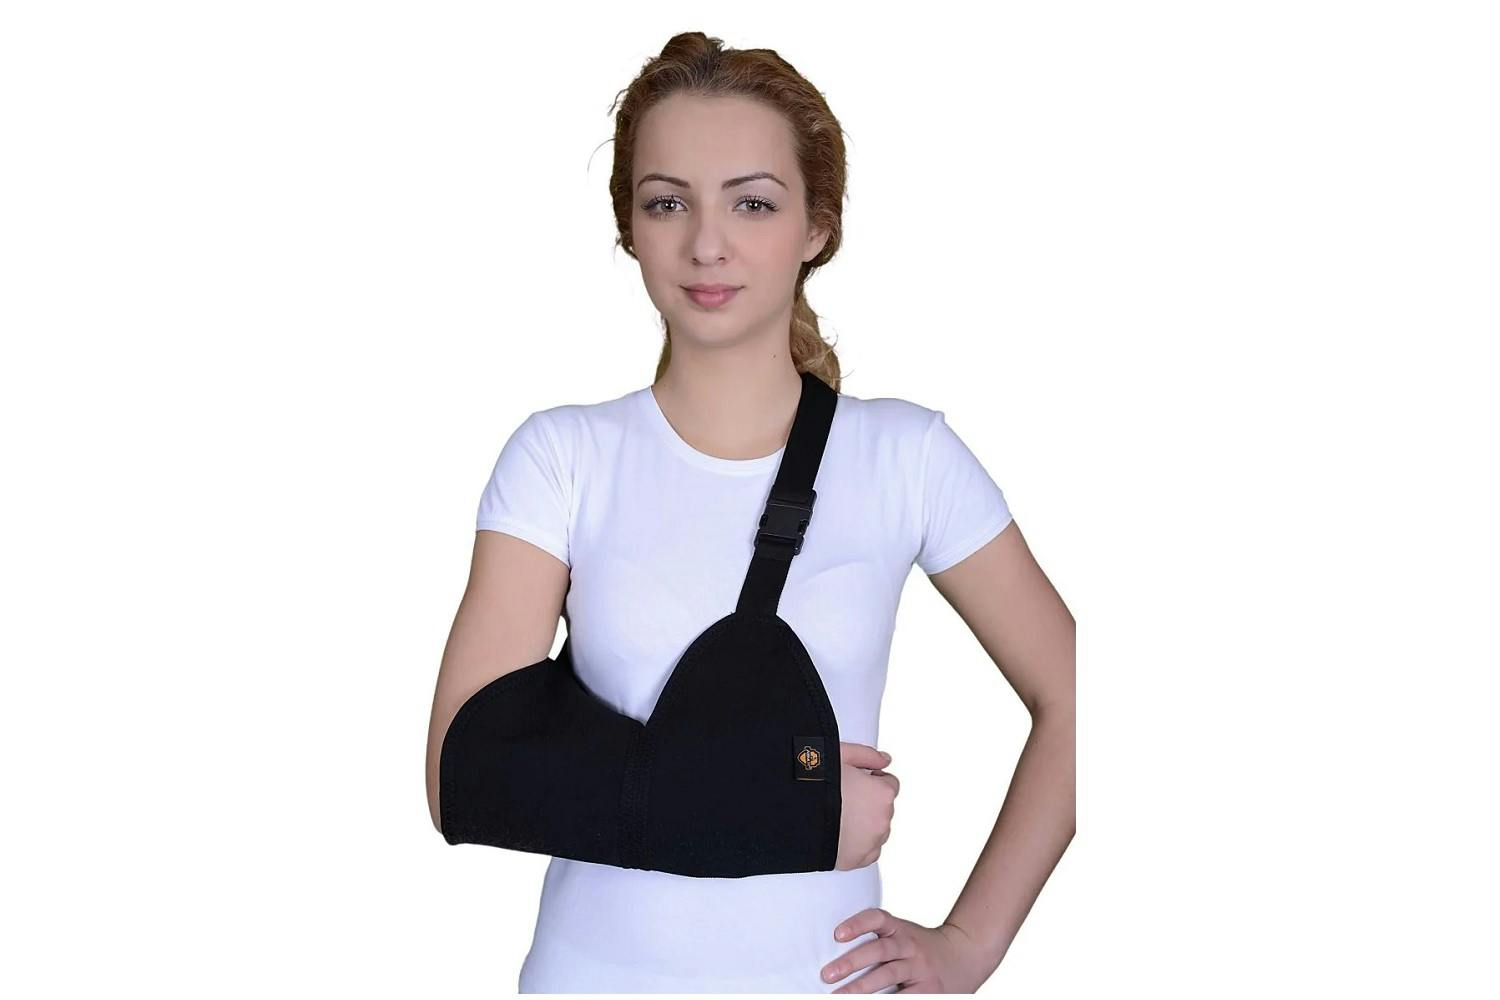 Hemmka Health ARM5300 Arm Sling | One Size Fits All